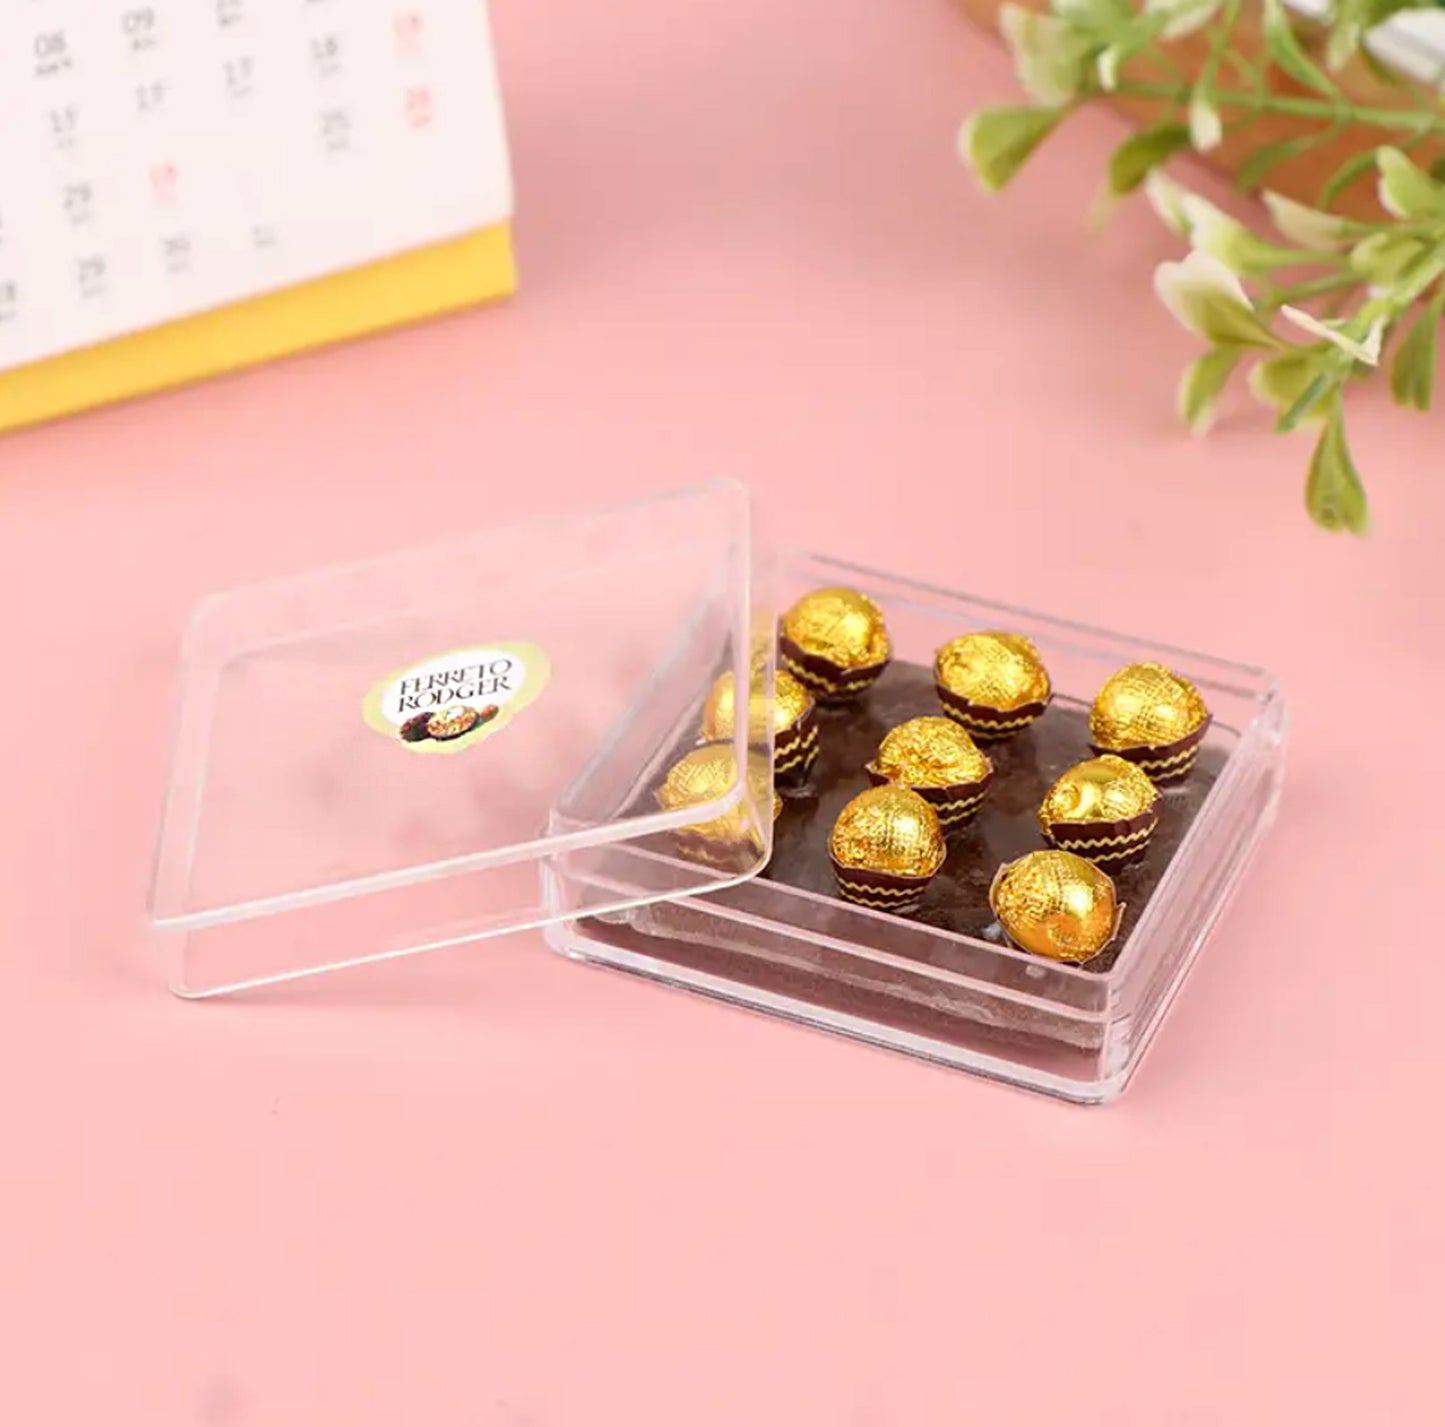 Sqaure shaped box of miniature Ferrer Chocolates